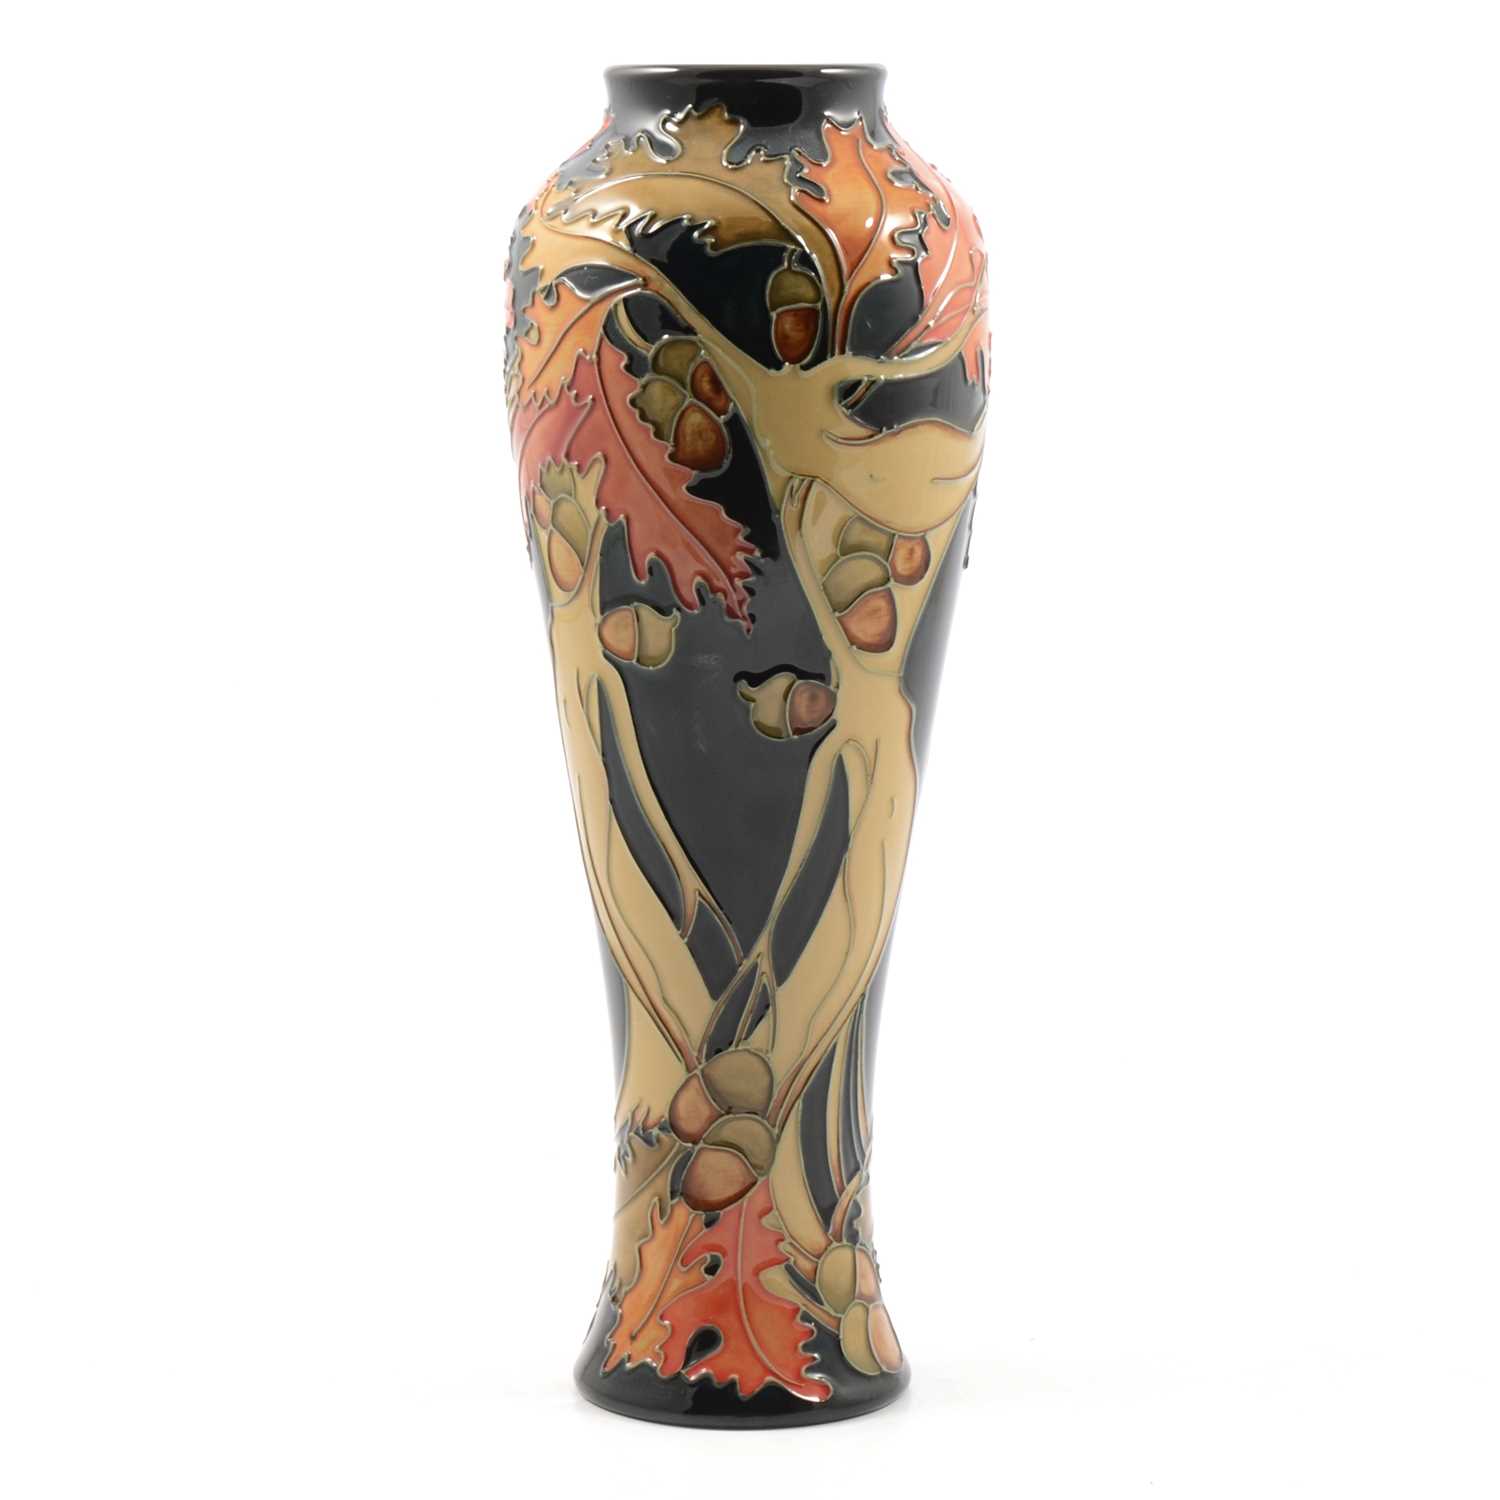 Lot 5 - A Moorcroft Pottery vase, 'Oak Nymph' pattern designed by Kerry Goodwin.